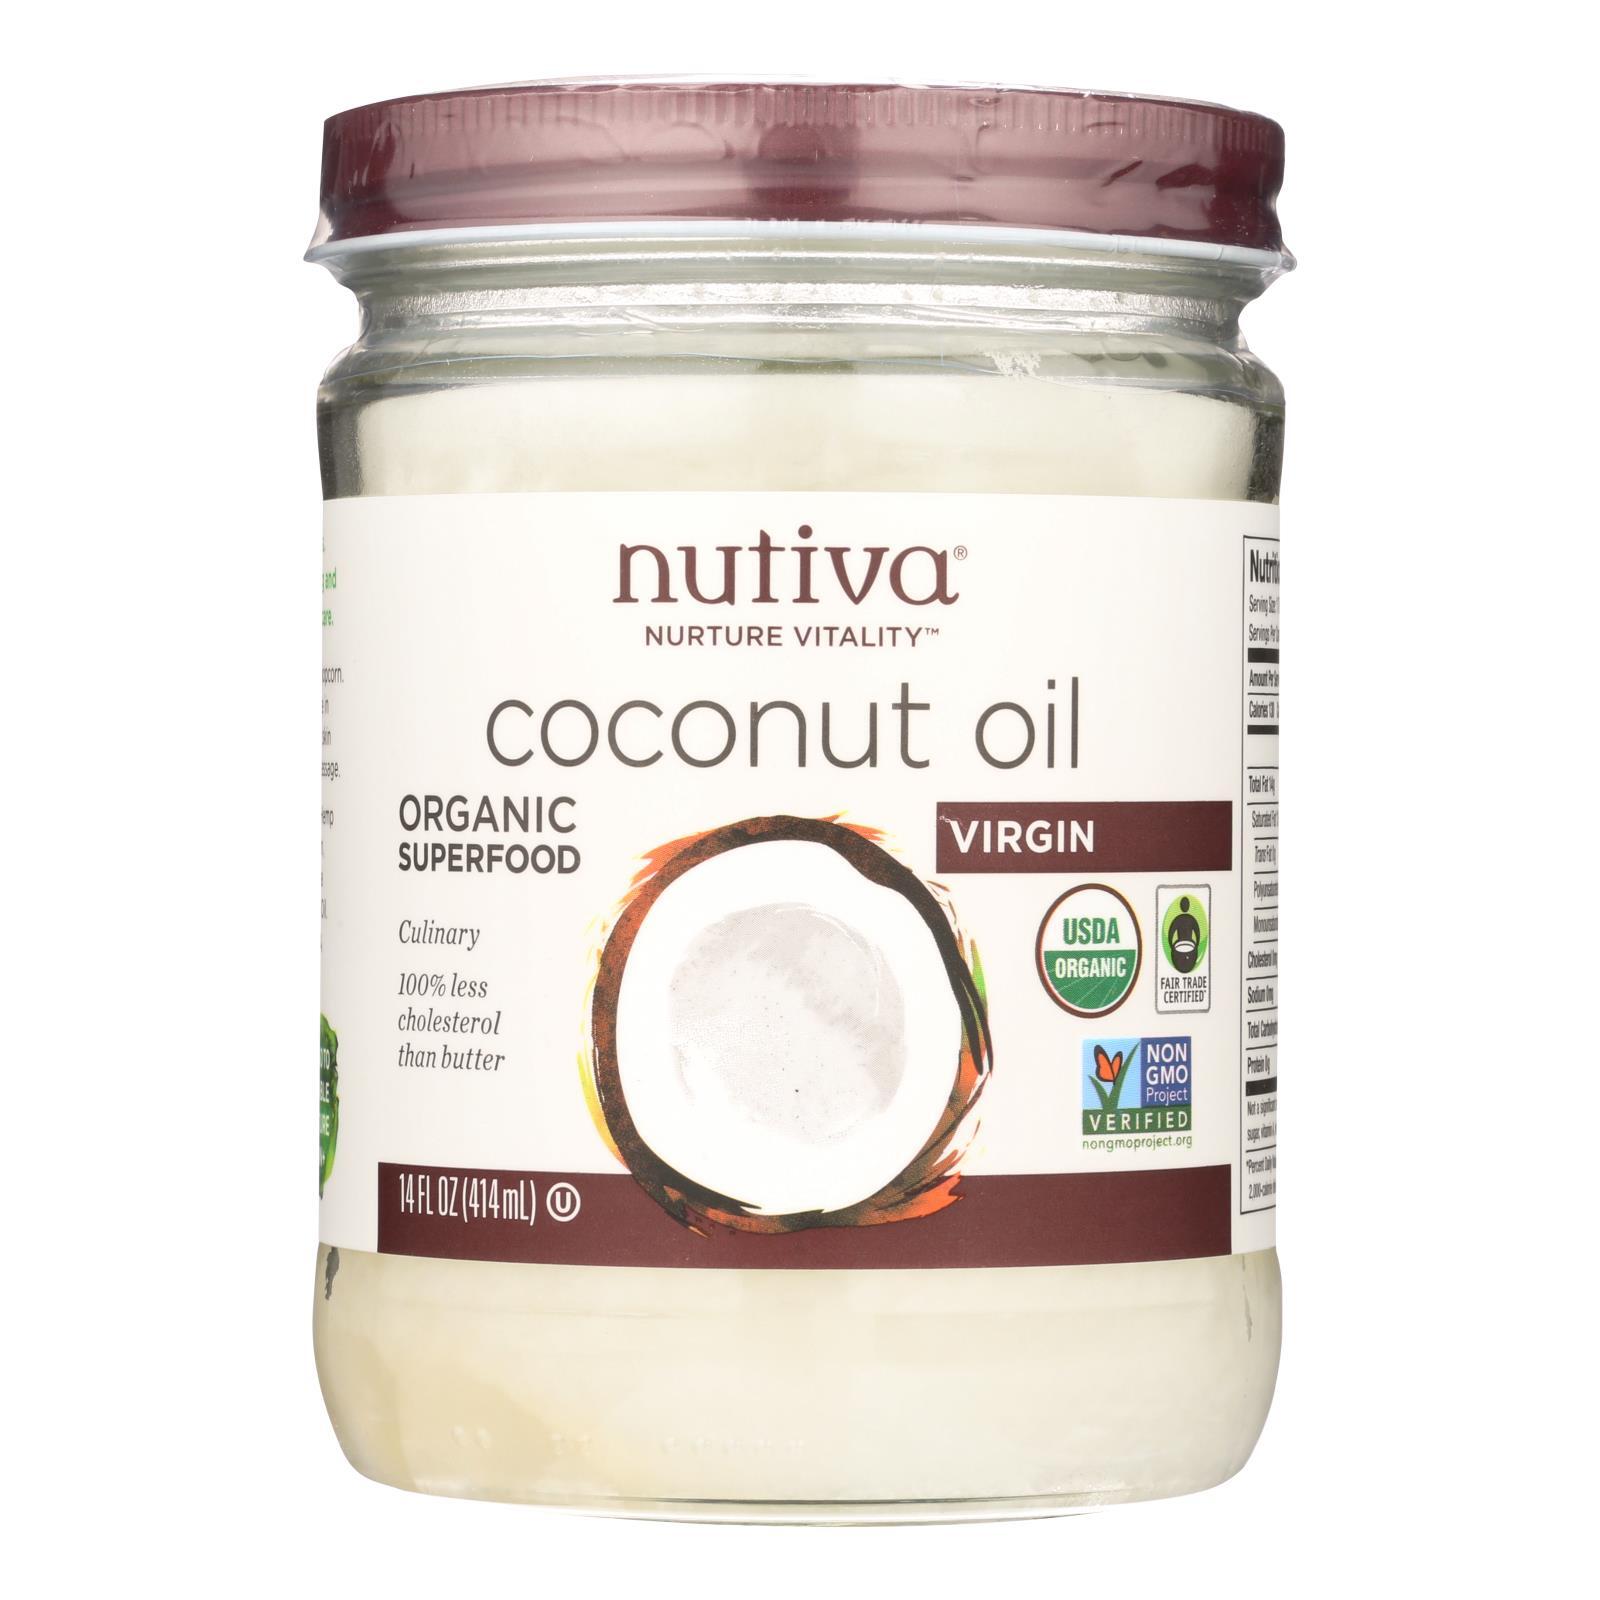 Nutiva Coconut Oil – Organic – Superfood – Virgin – Unrefined – 14 oz – Case of 6